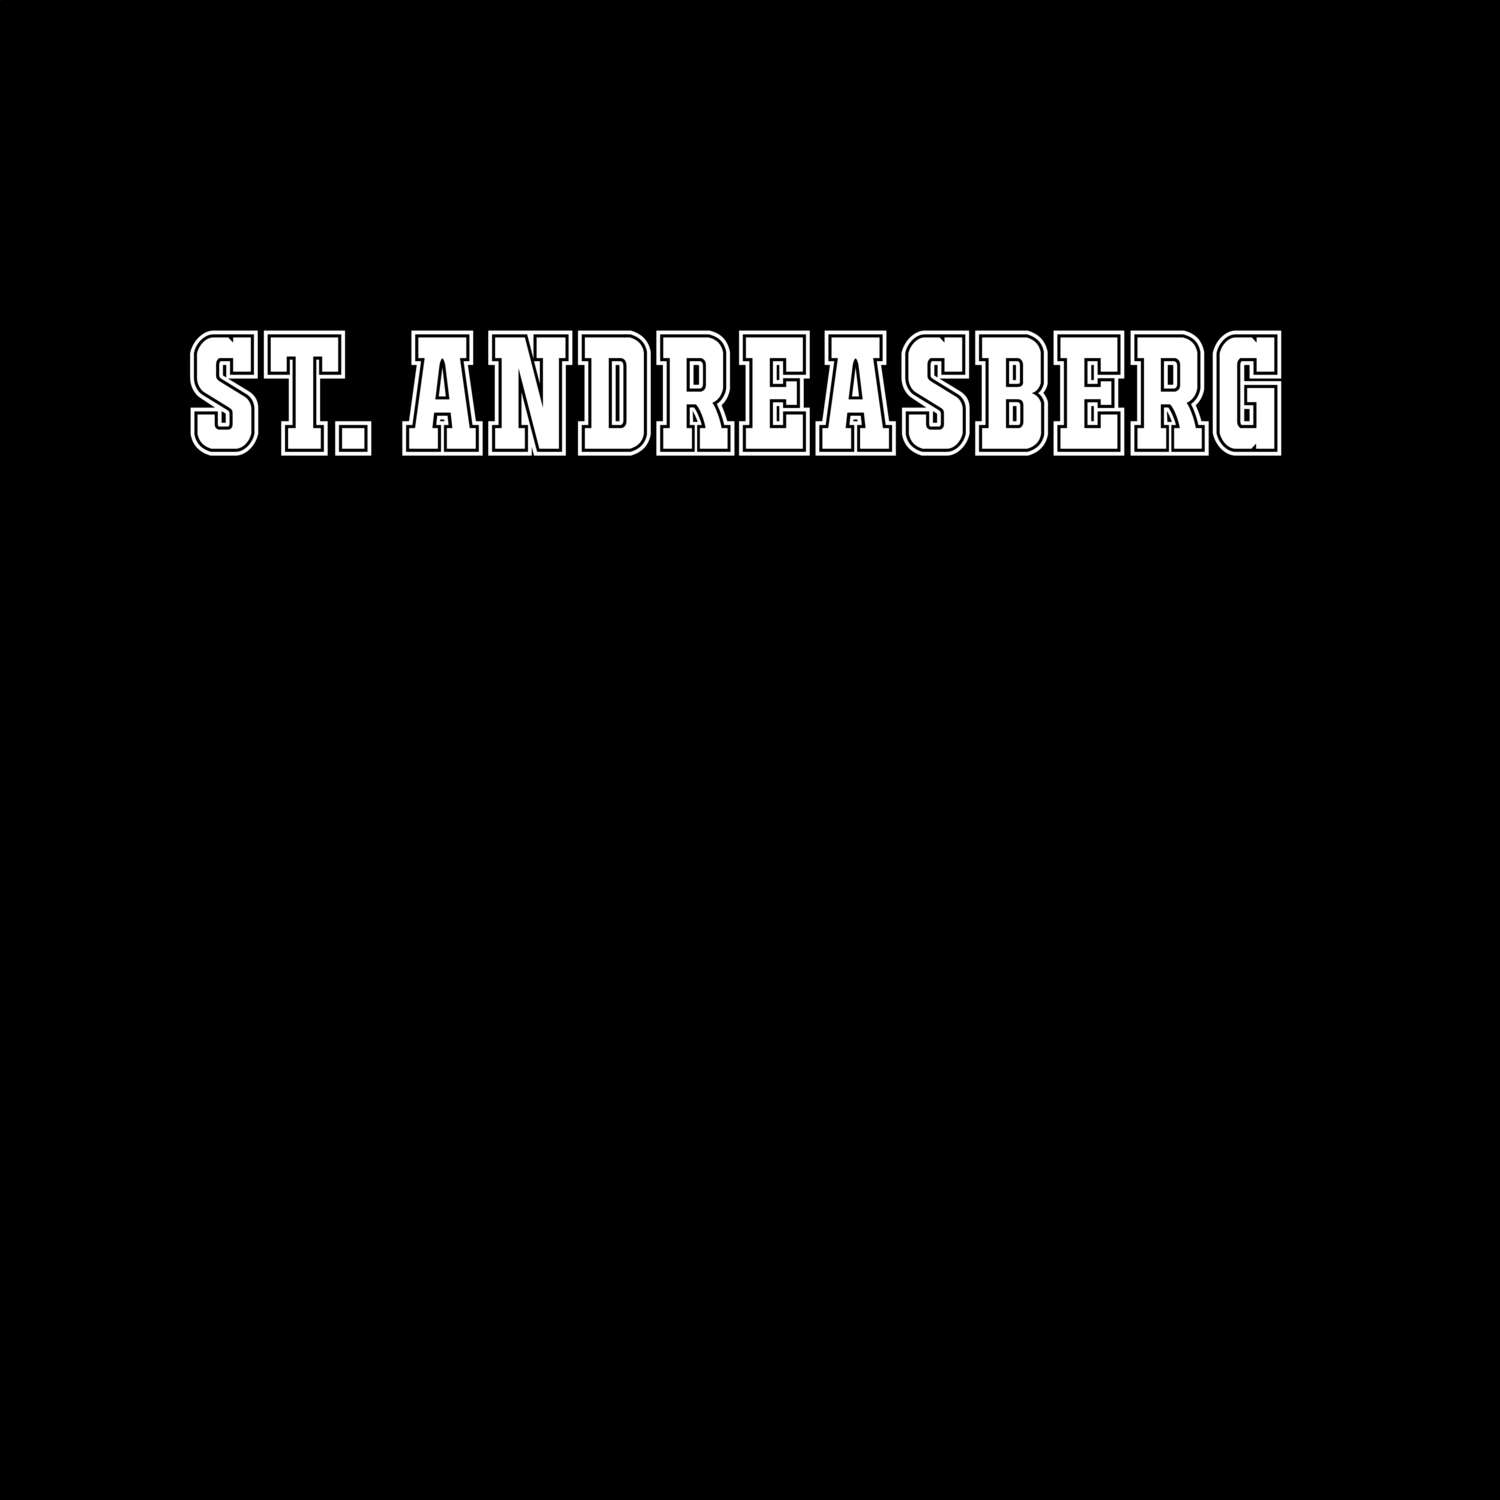 St. Andreasberg T-Shirt »Classic«